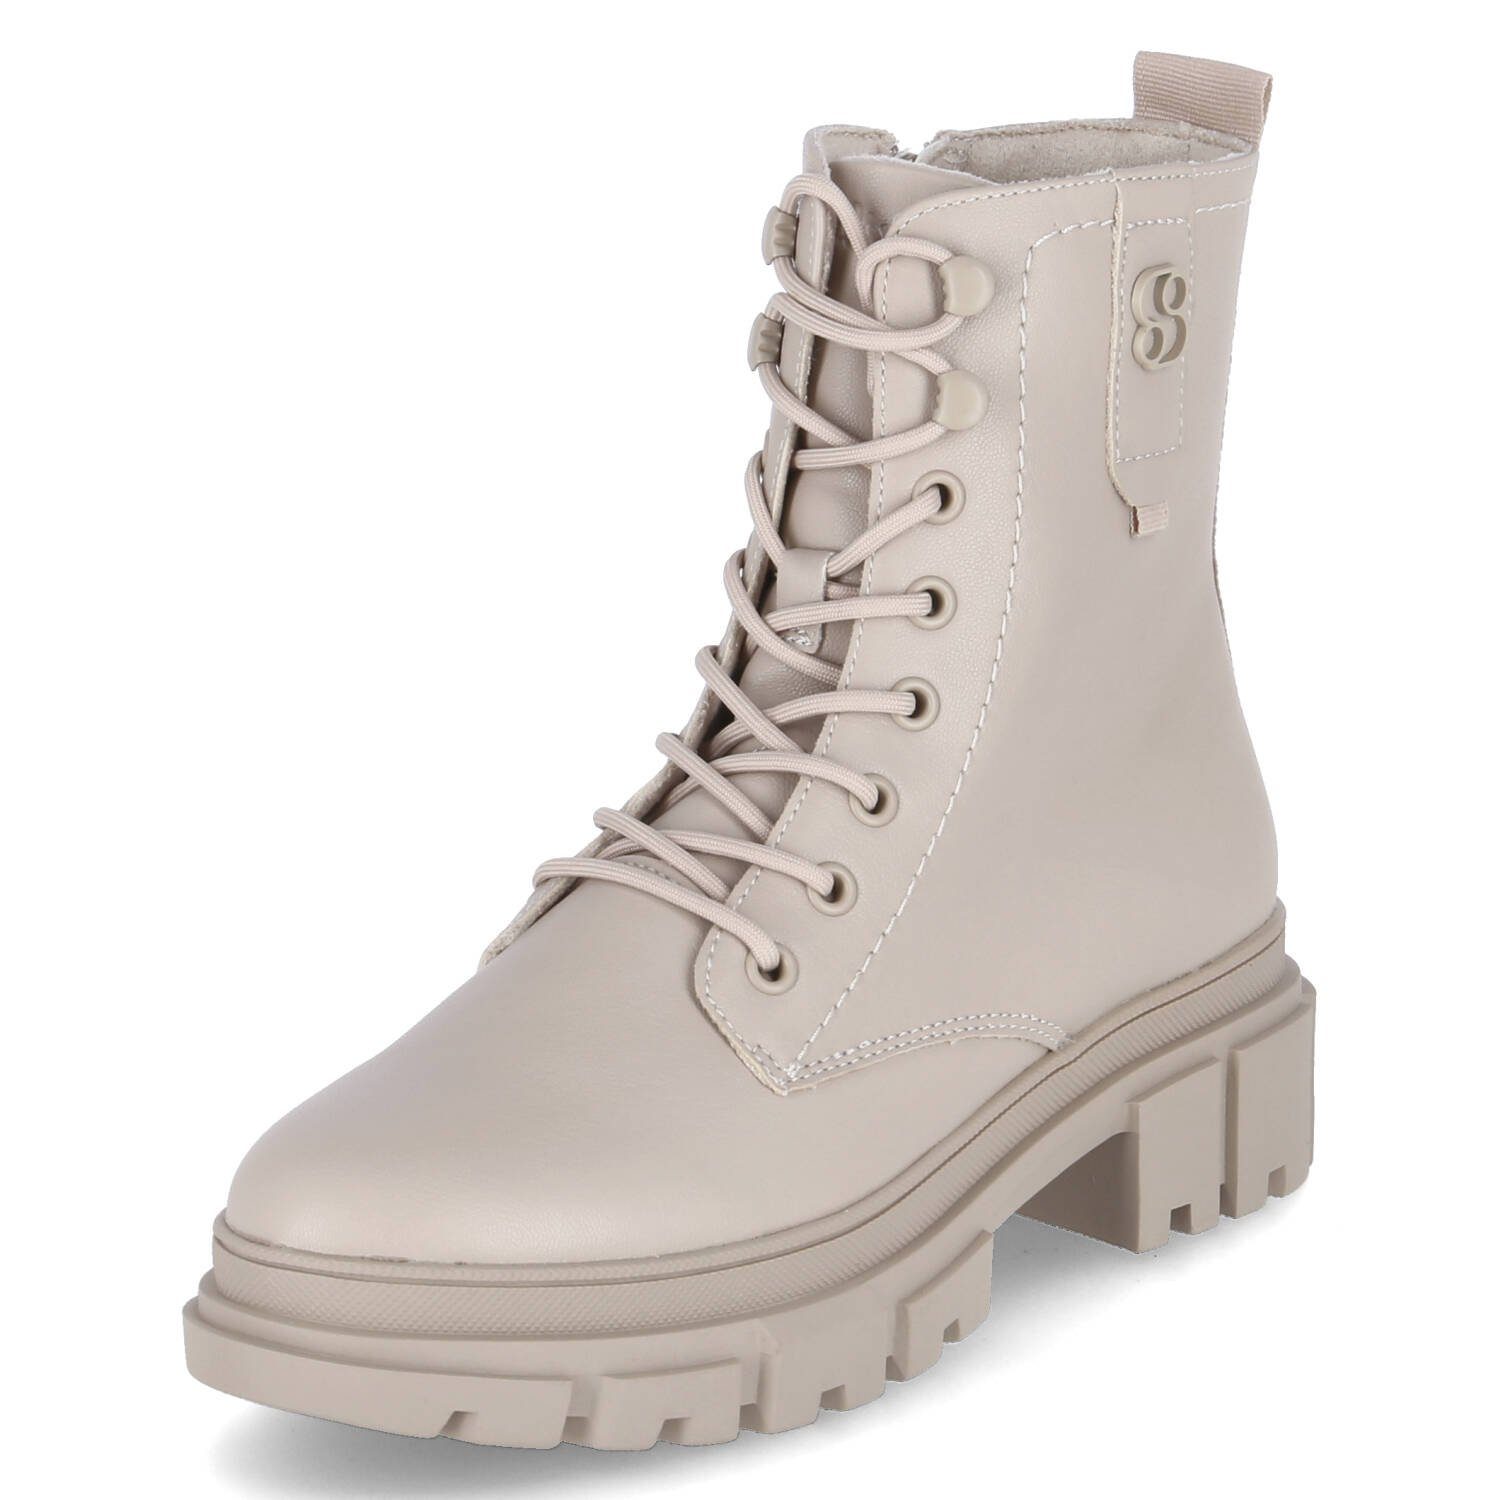 s.Oliver Combat Boots Ivory Schnürstiefel (20304157)